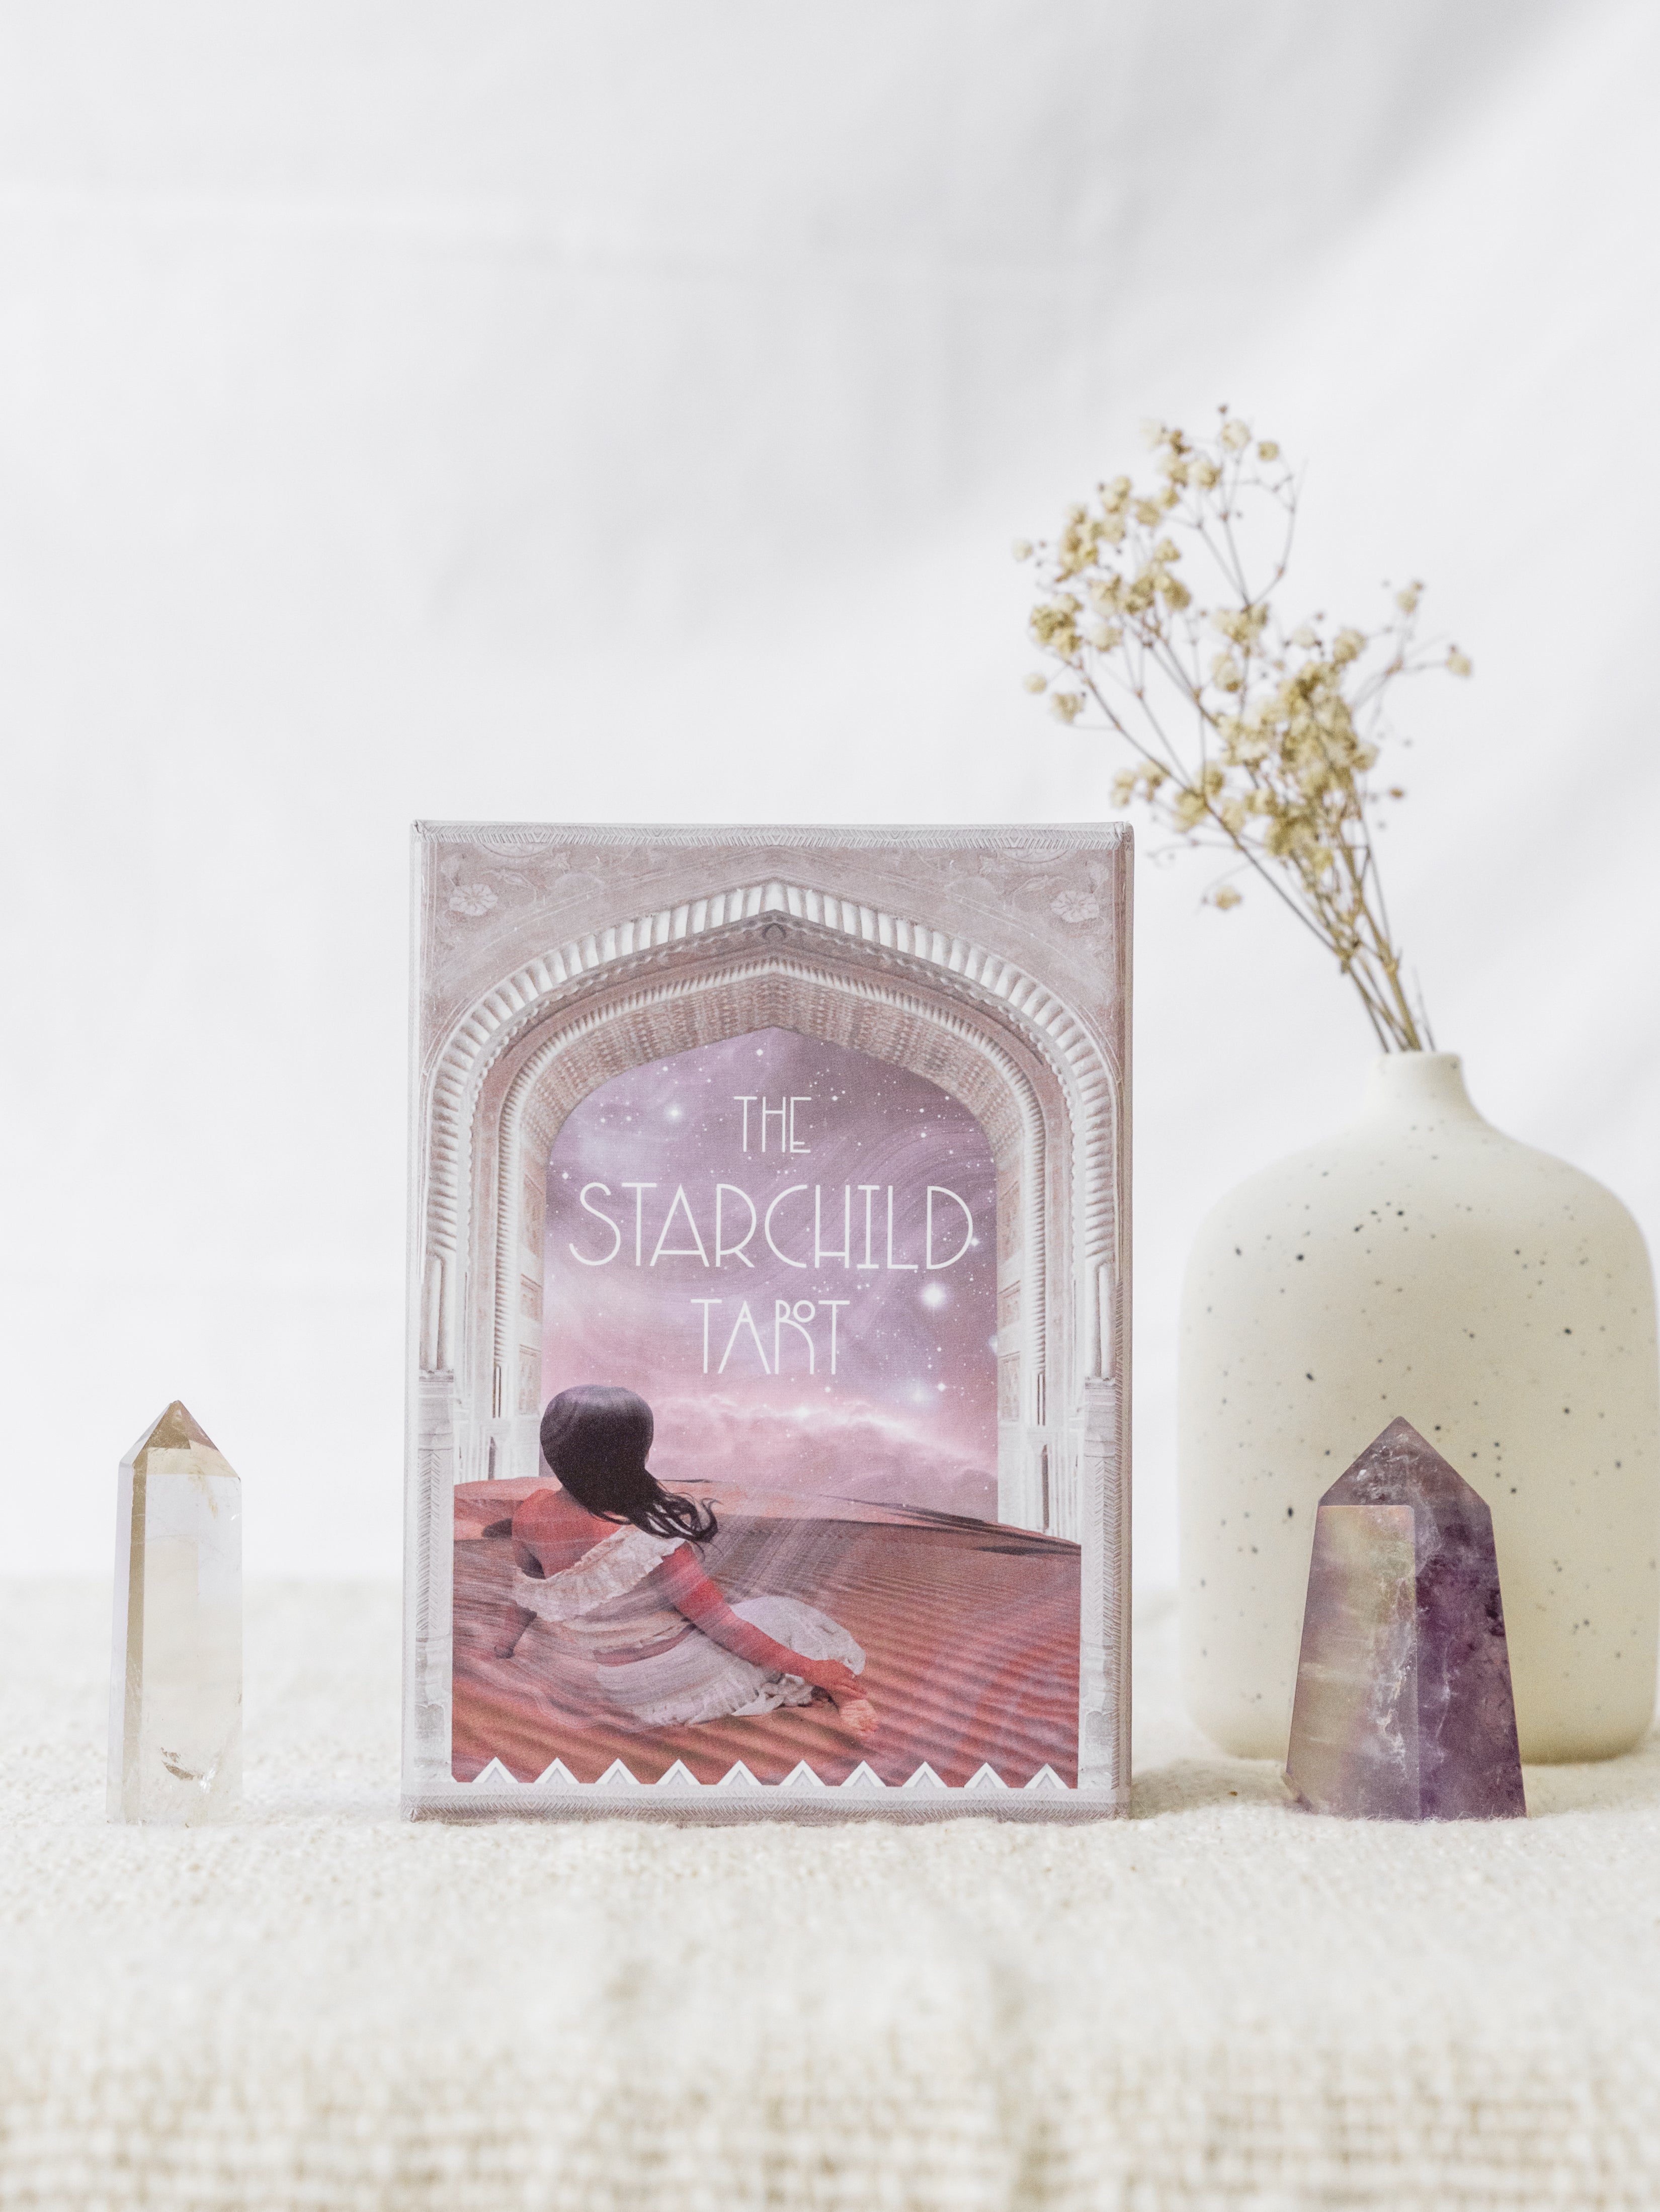 The Starchild Tarot - 1st Edition - ROSE PORTAL BOX